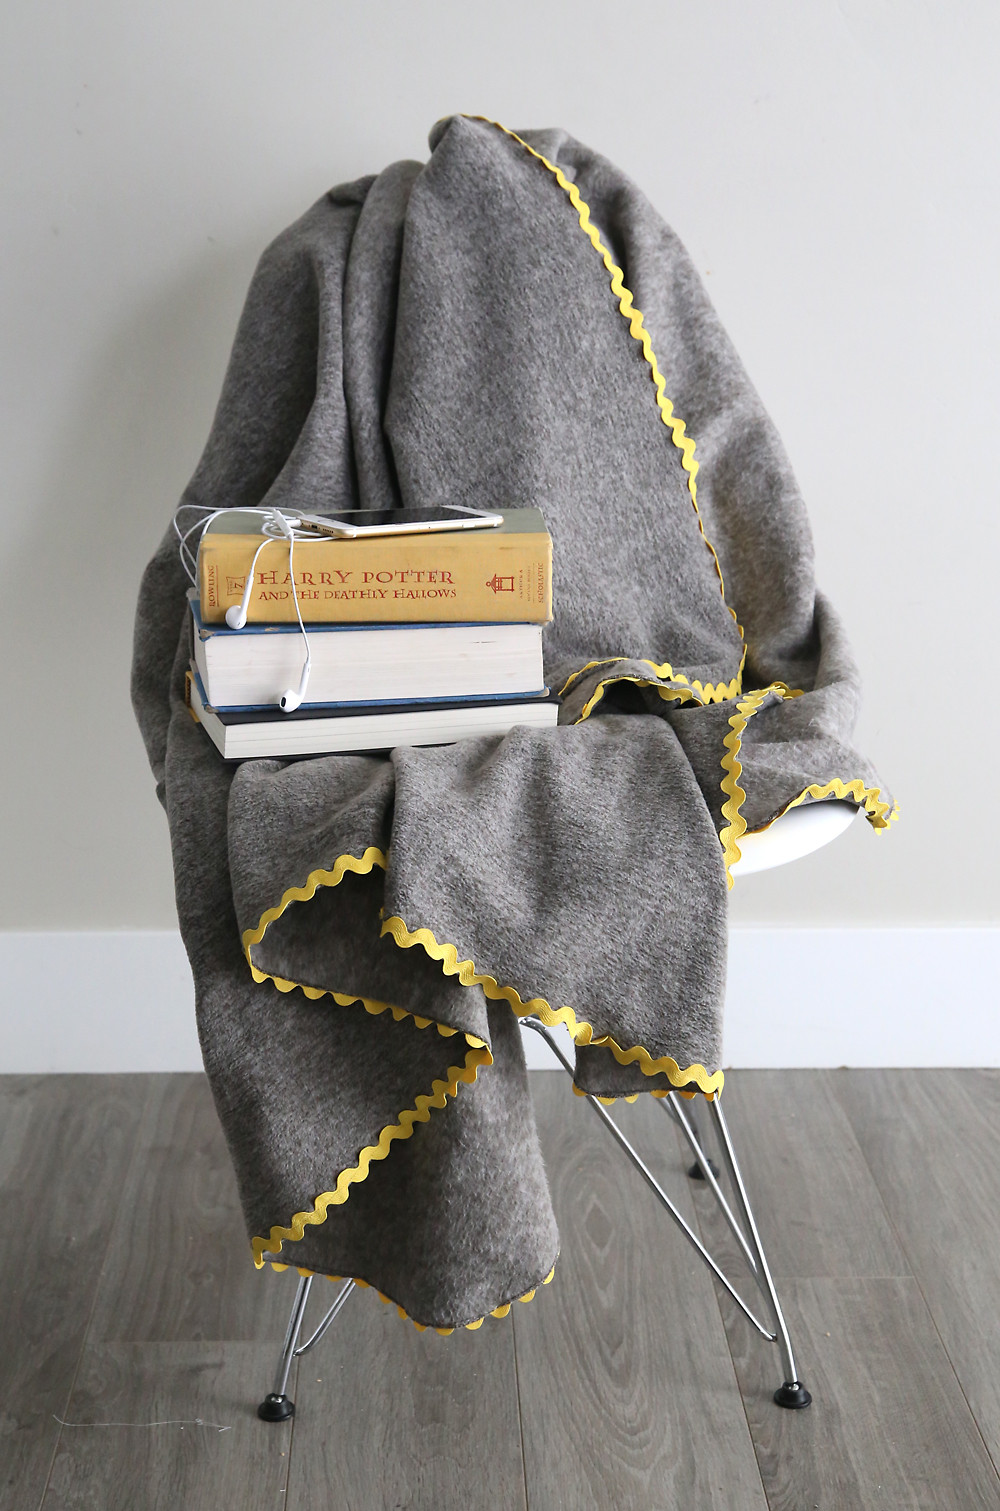 Best ideas about Fleece Blankets DIY
. Save or Pin easy & beautiful DIY fleece blankets It s Always Autumn Now.